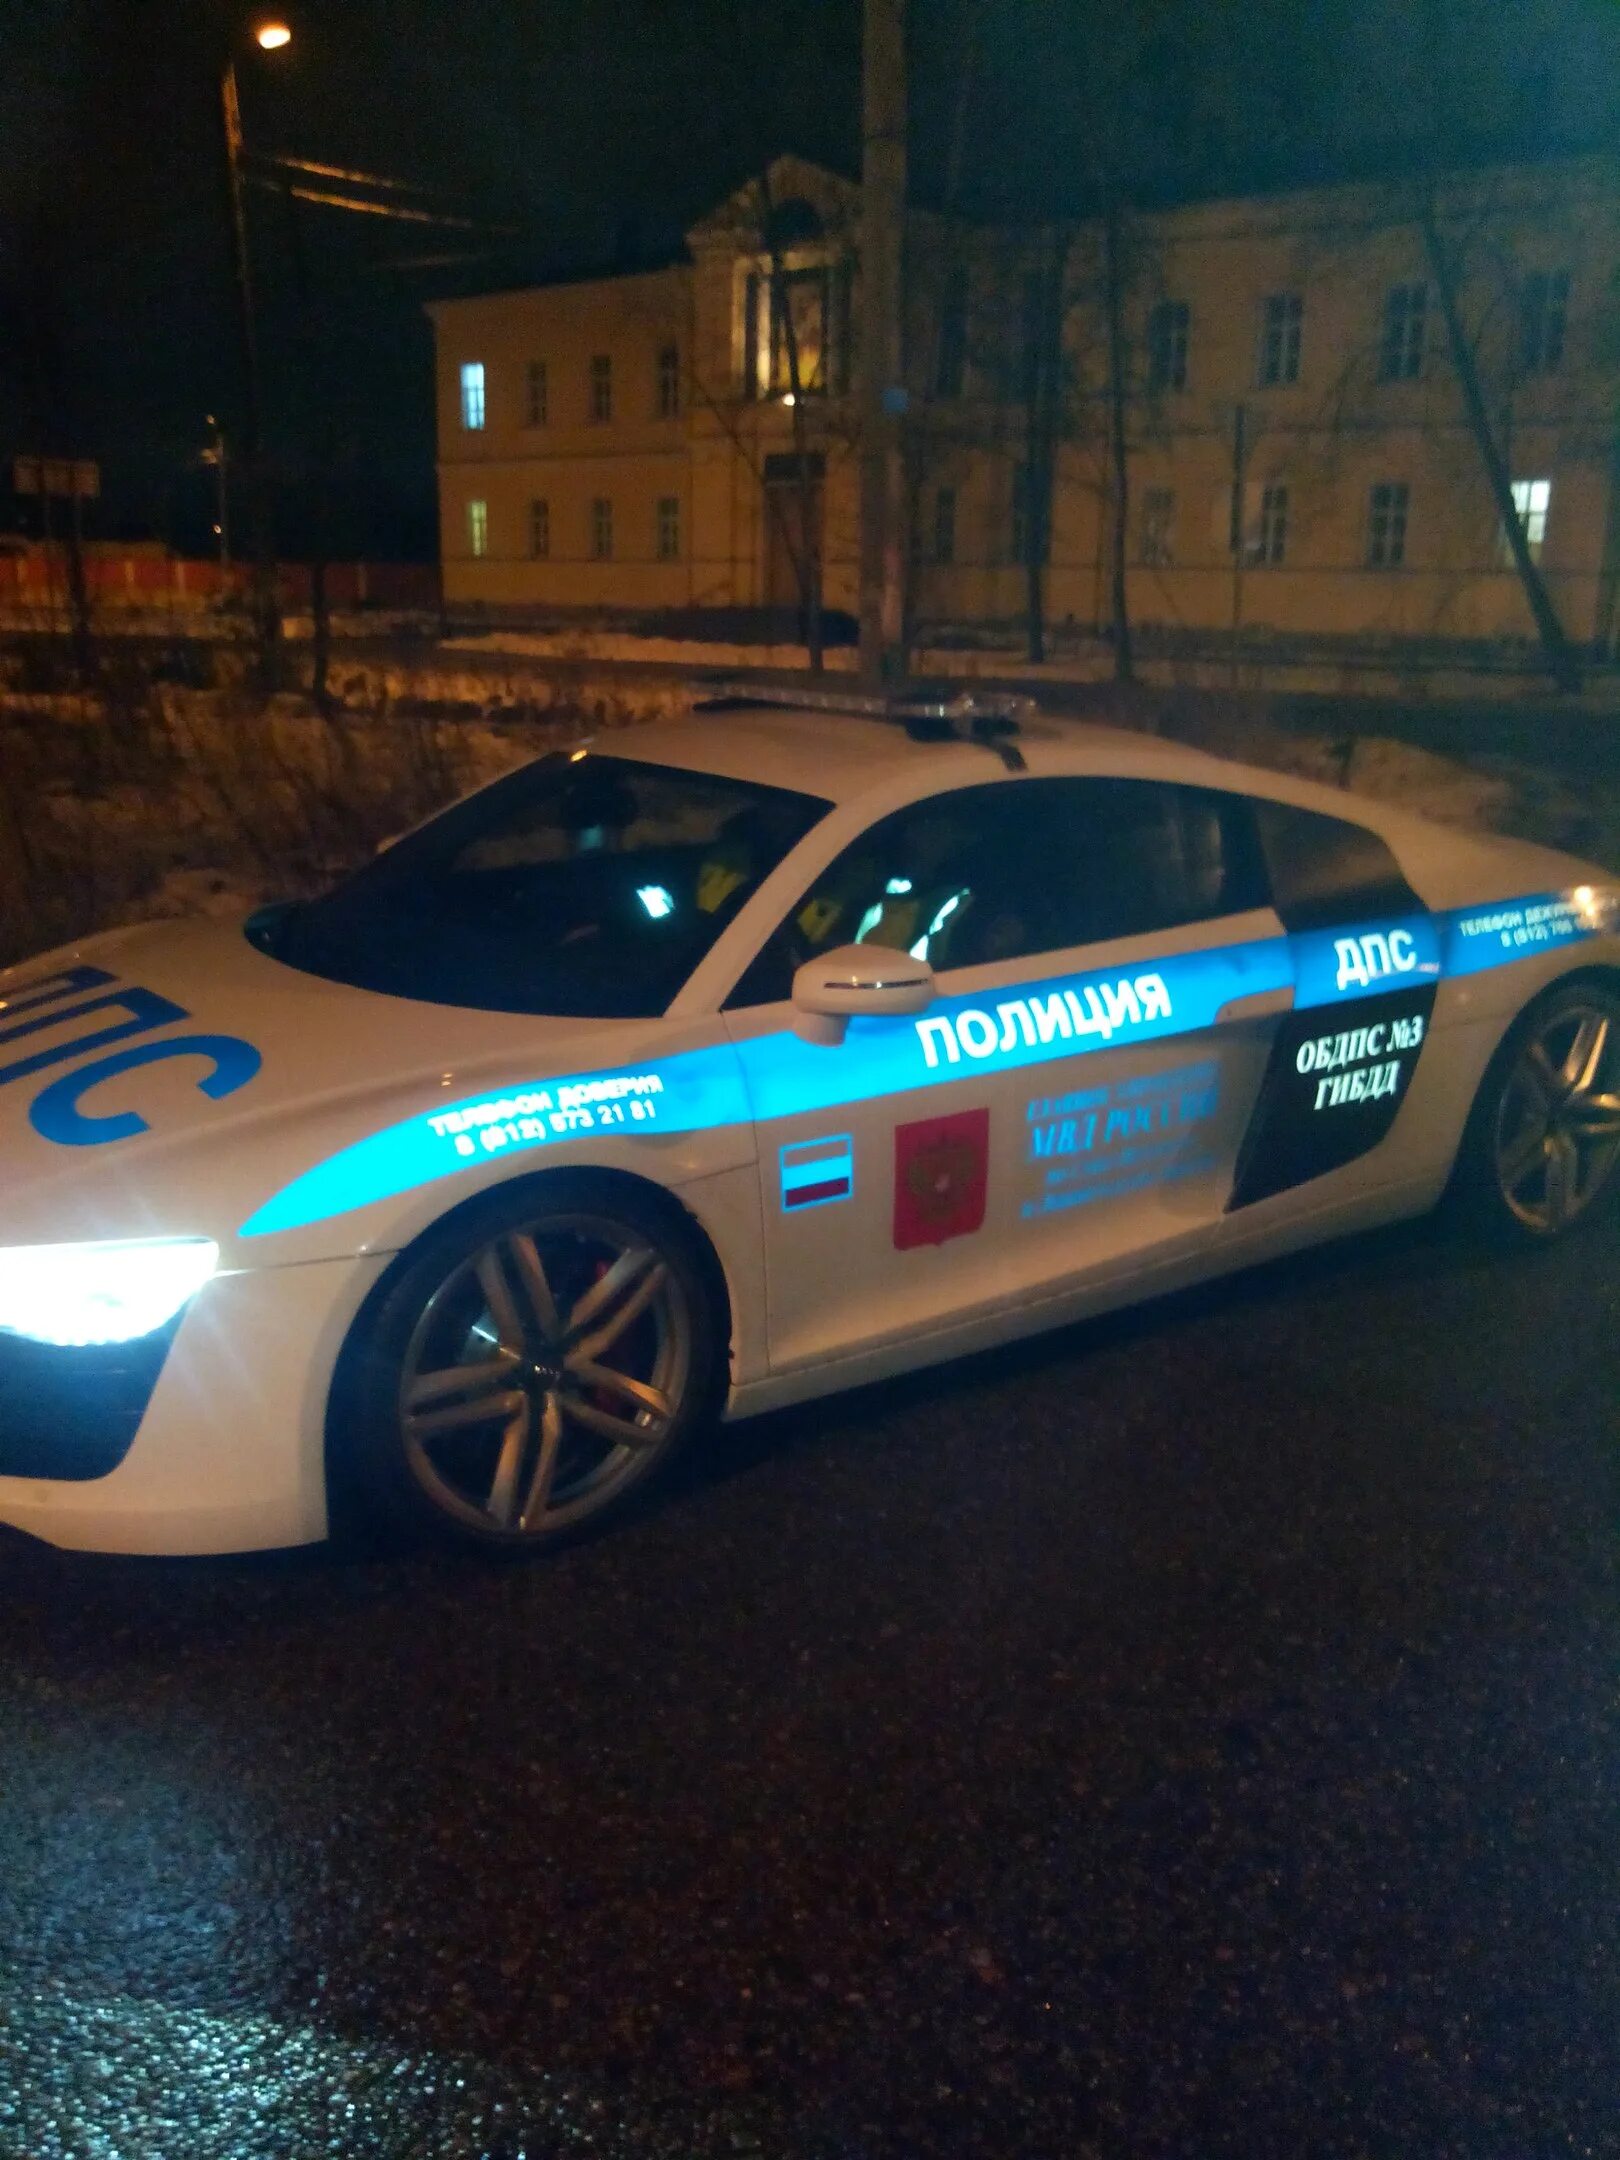 Audi r8 ДПС. Audi r8 полиция Санкт-Петербурга. Ауди р8 полиция Москва. Audi r8 СПБ ДПС. Дпс питера